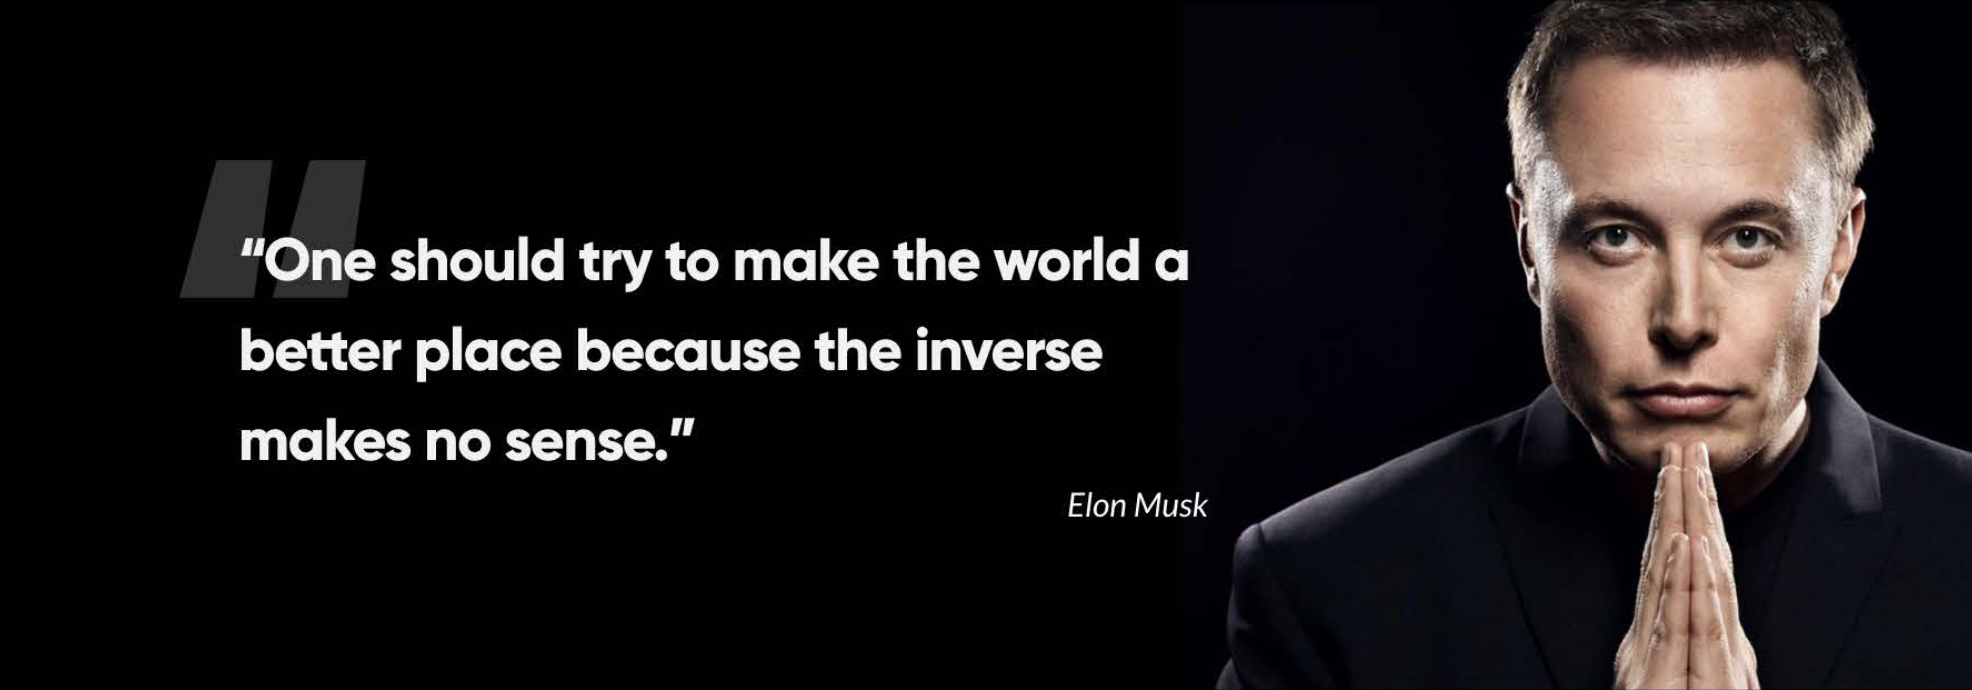 UX Design Approach Adapt Financial Brand Digital Age Metaverse Elon Musk quote